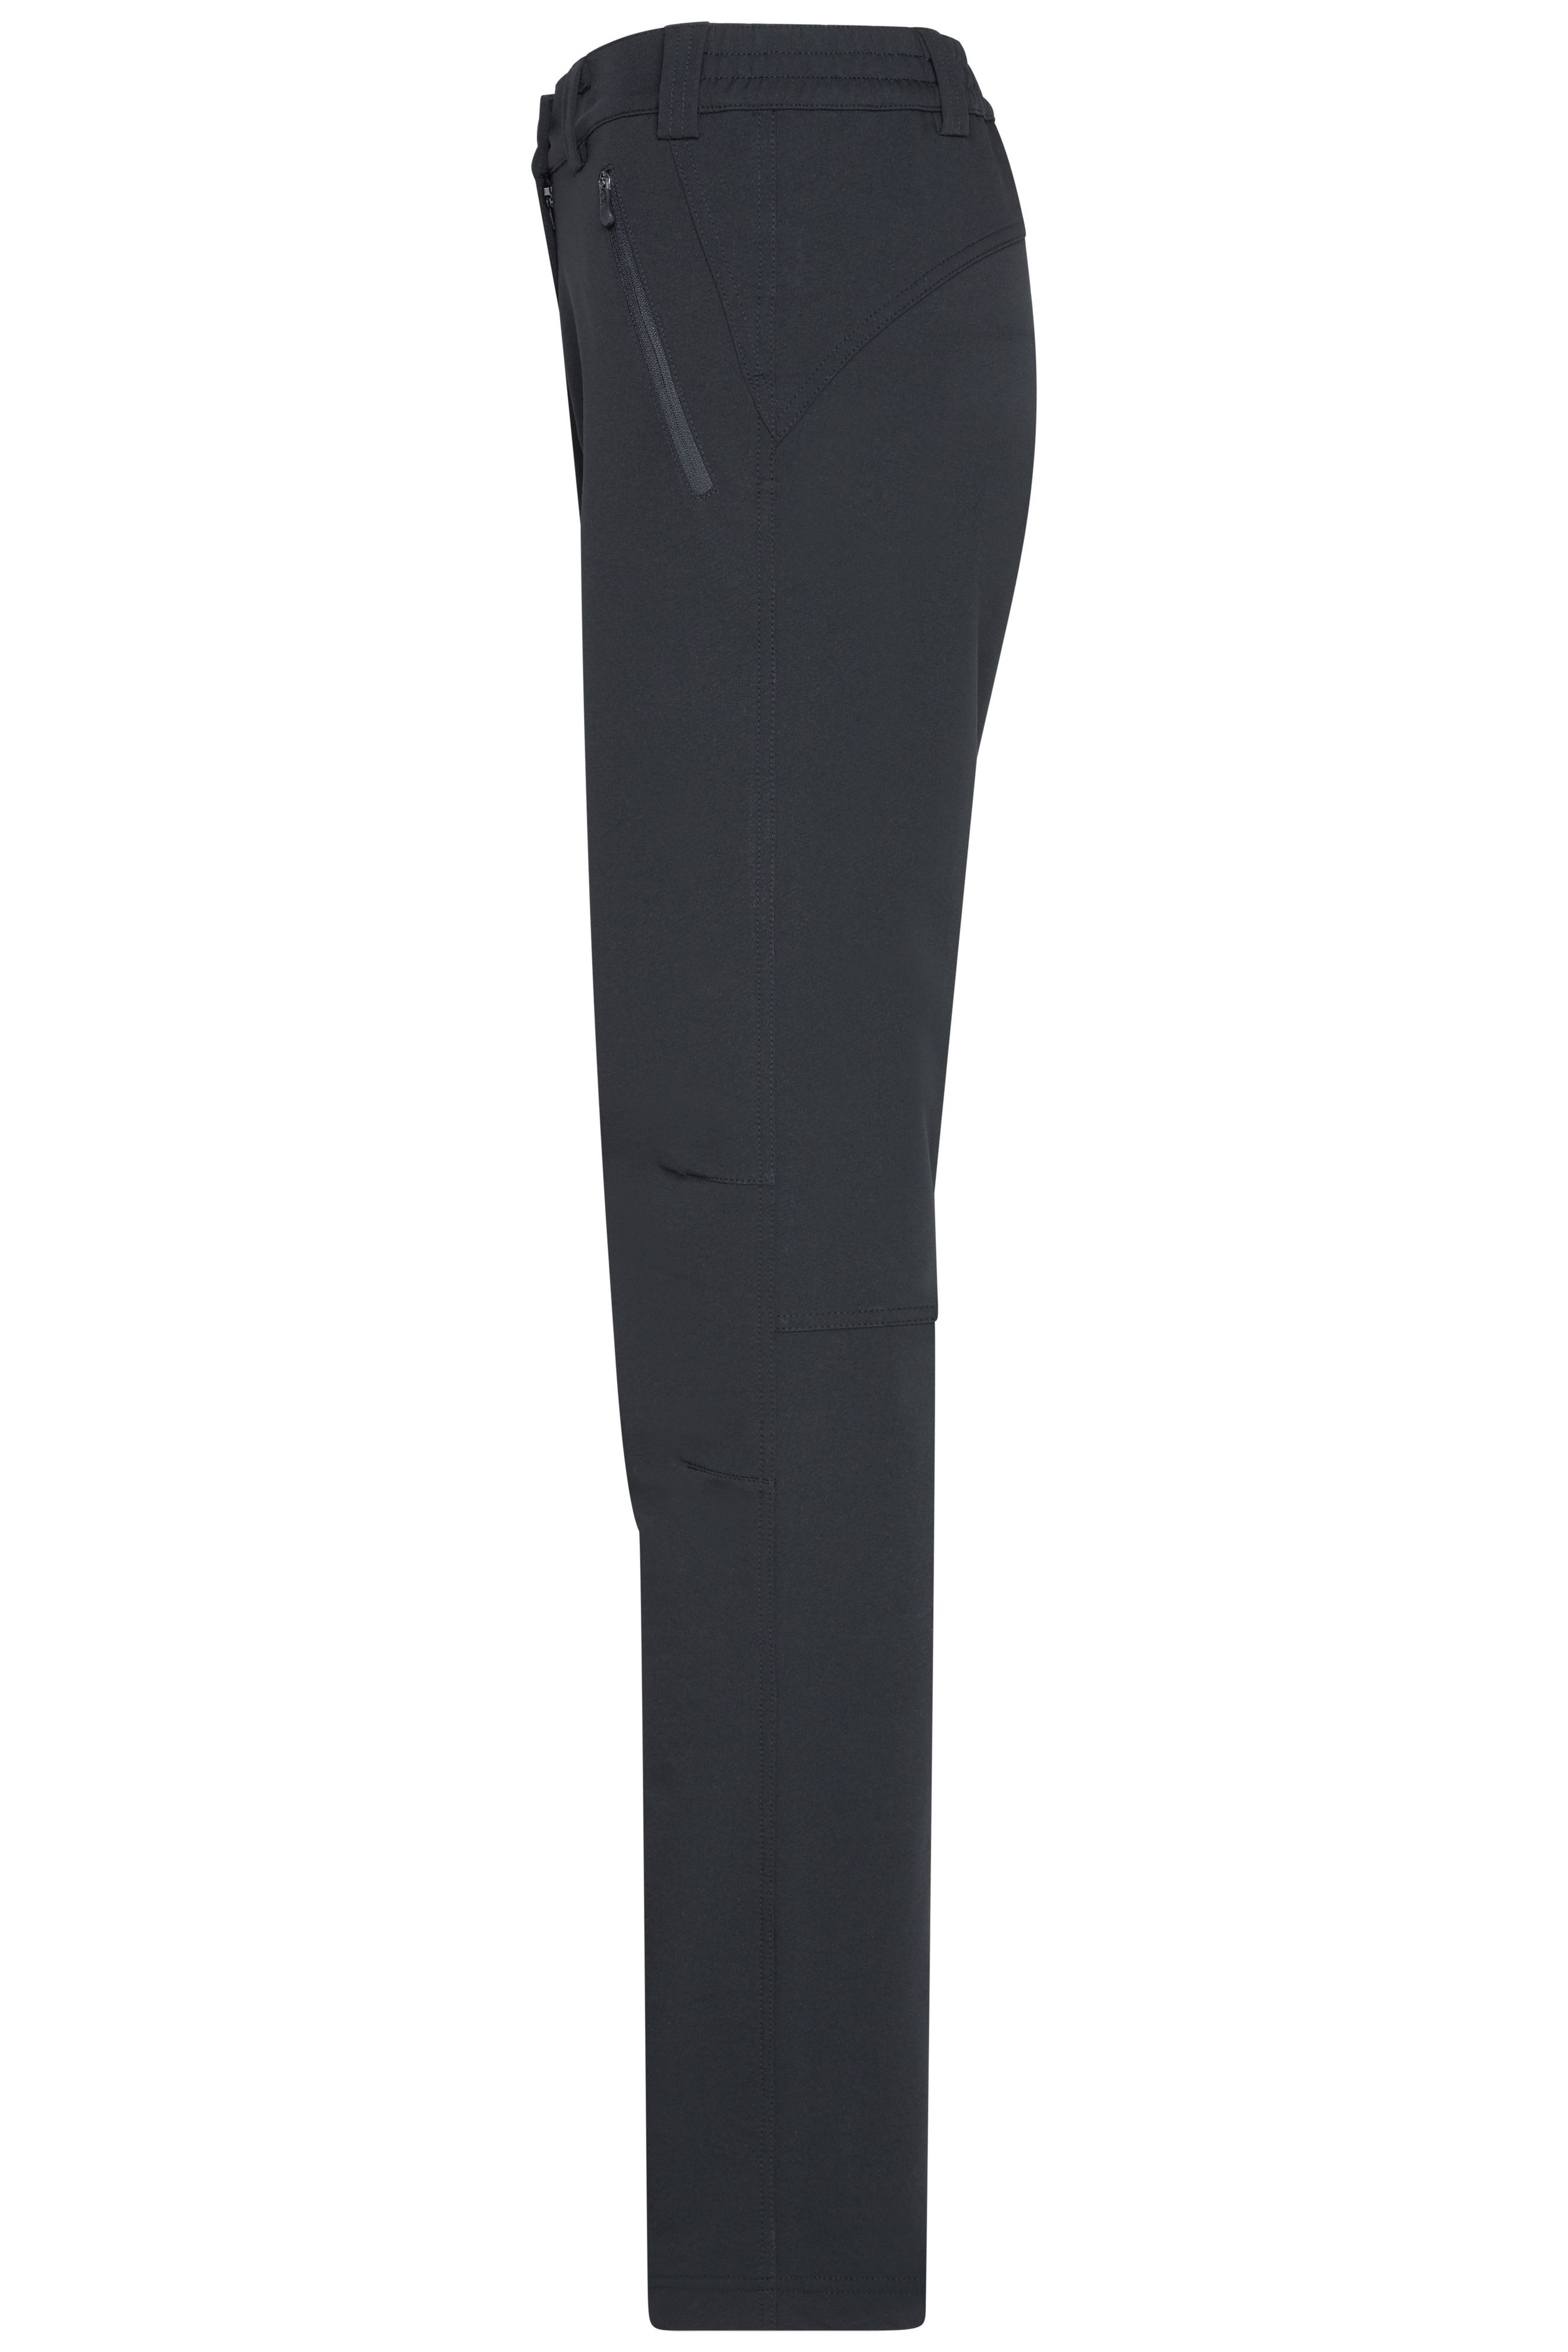 Ladies' Outdoor Pants JN584 Elastische Outdoorhose mit leicht geformter Kniepartie